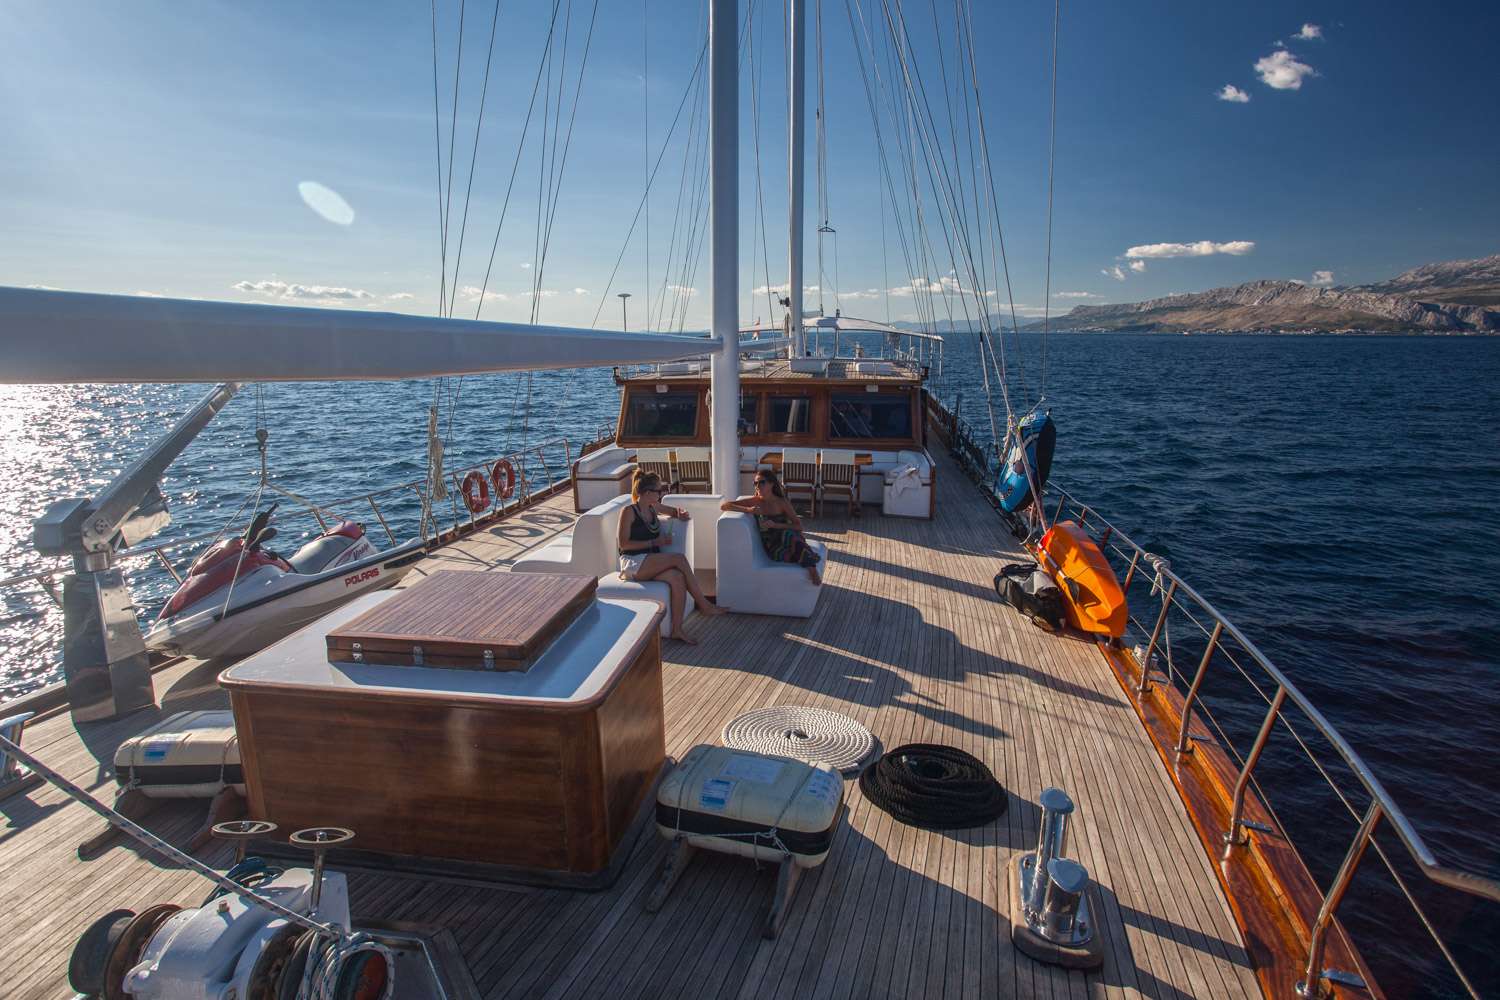 dawe-yachts-goleta-stella-maris-croacia-6967brochure5